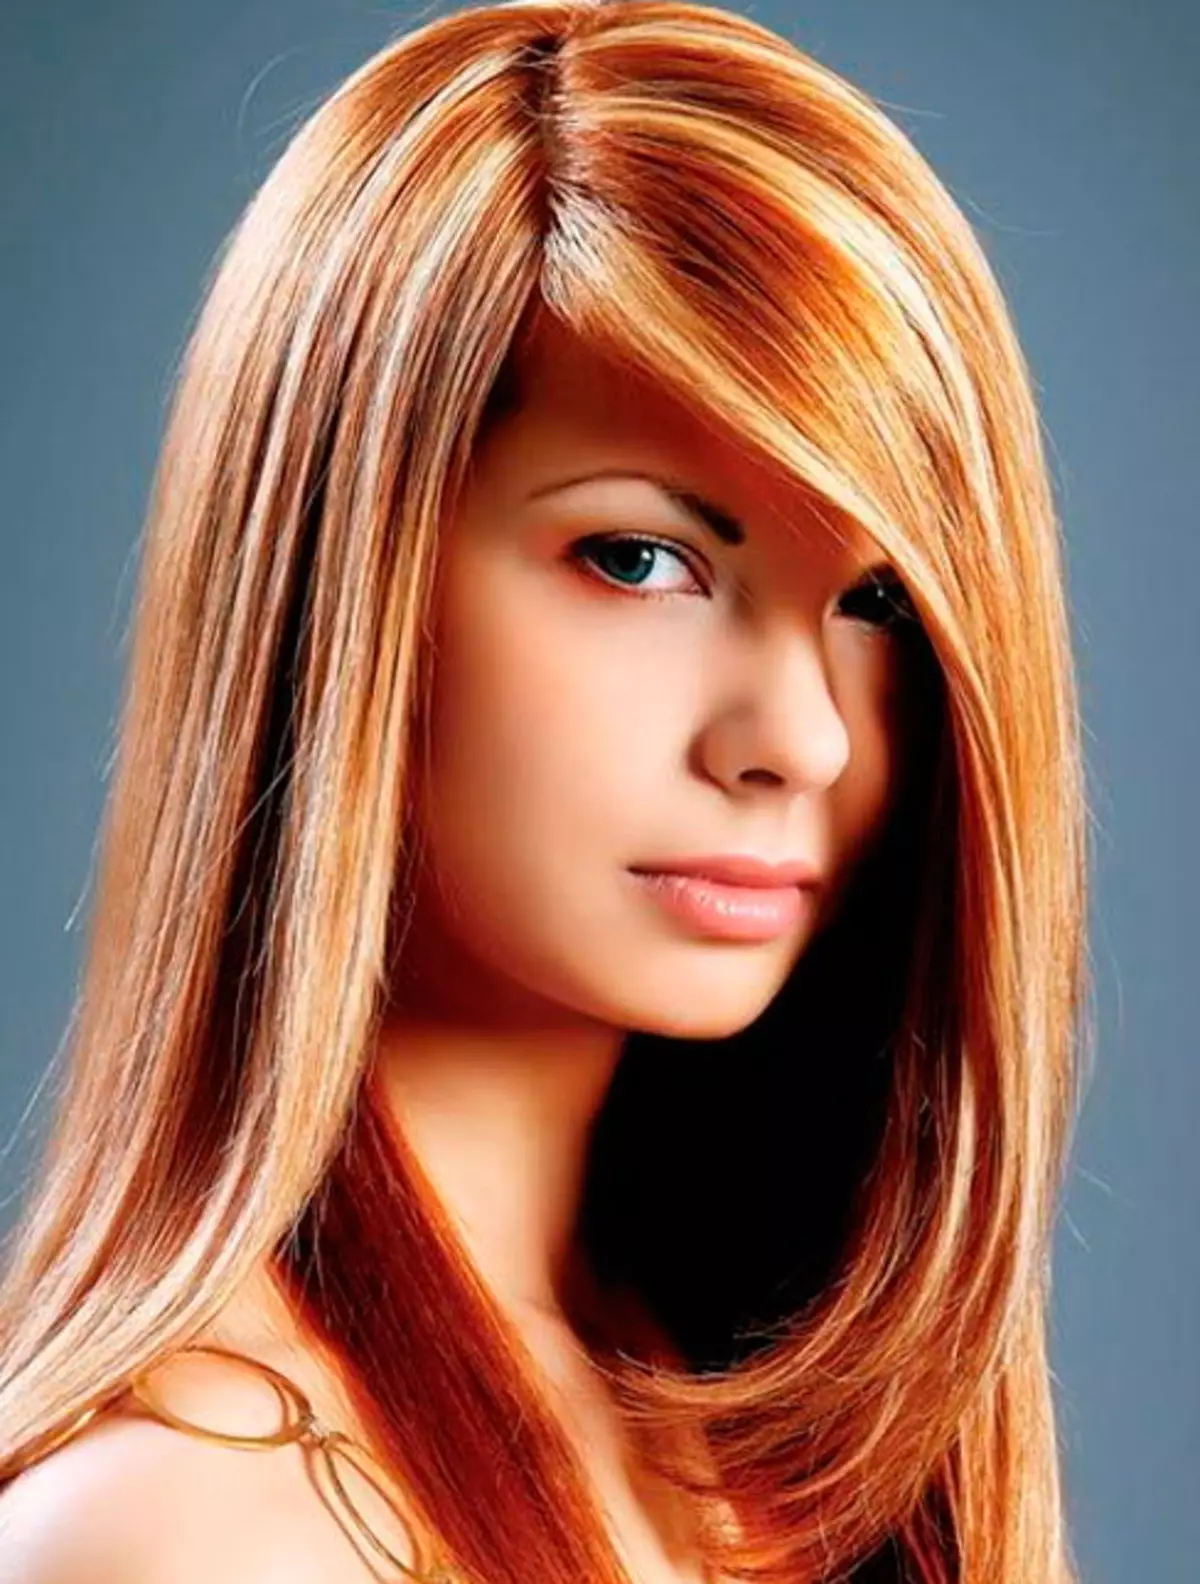 Taljenje na srednjoj kosi (50 fotografija): trendi i lijepe ženske frizure s talištem, tankom rastopljenom kosom srednje duljine 5363_12